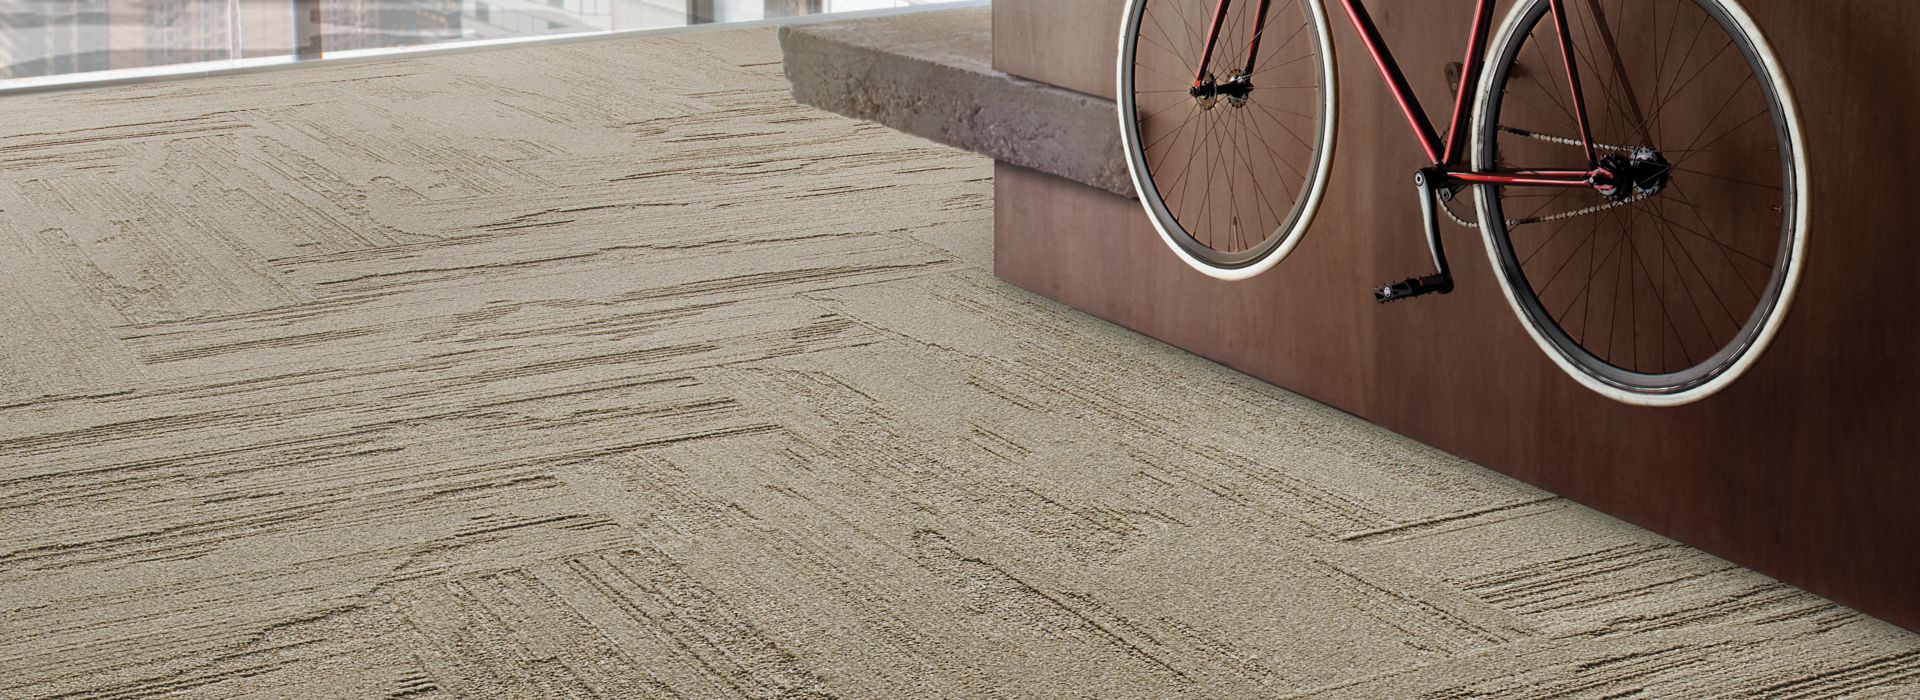 image Interface UR501 plank carpet tile in office common area with bike  numéro 1